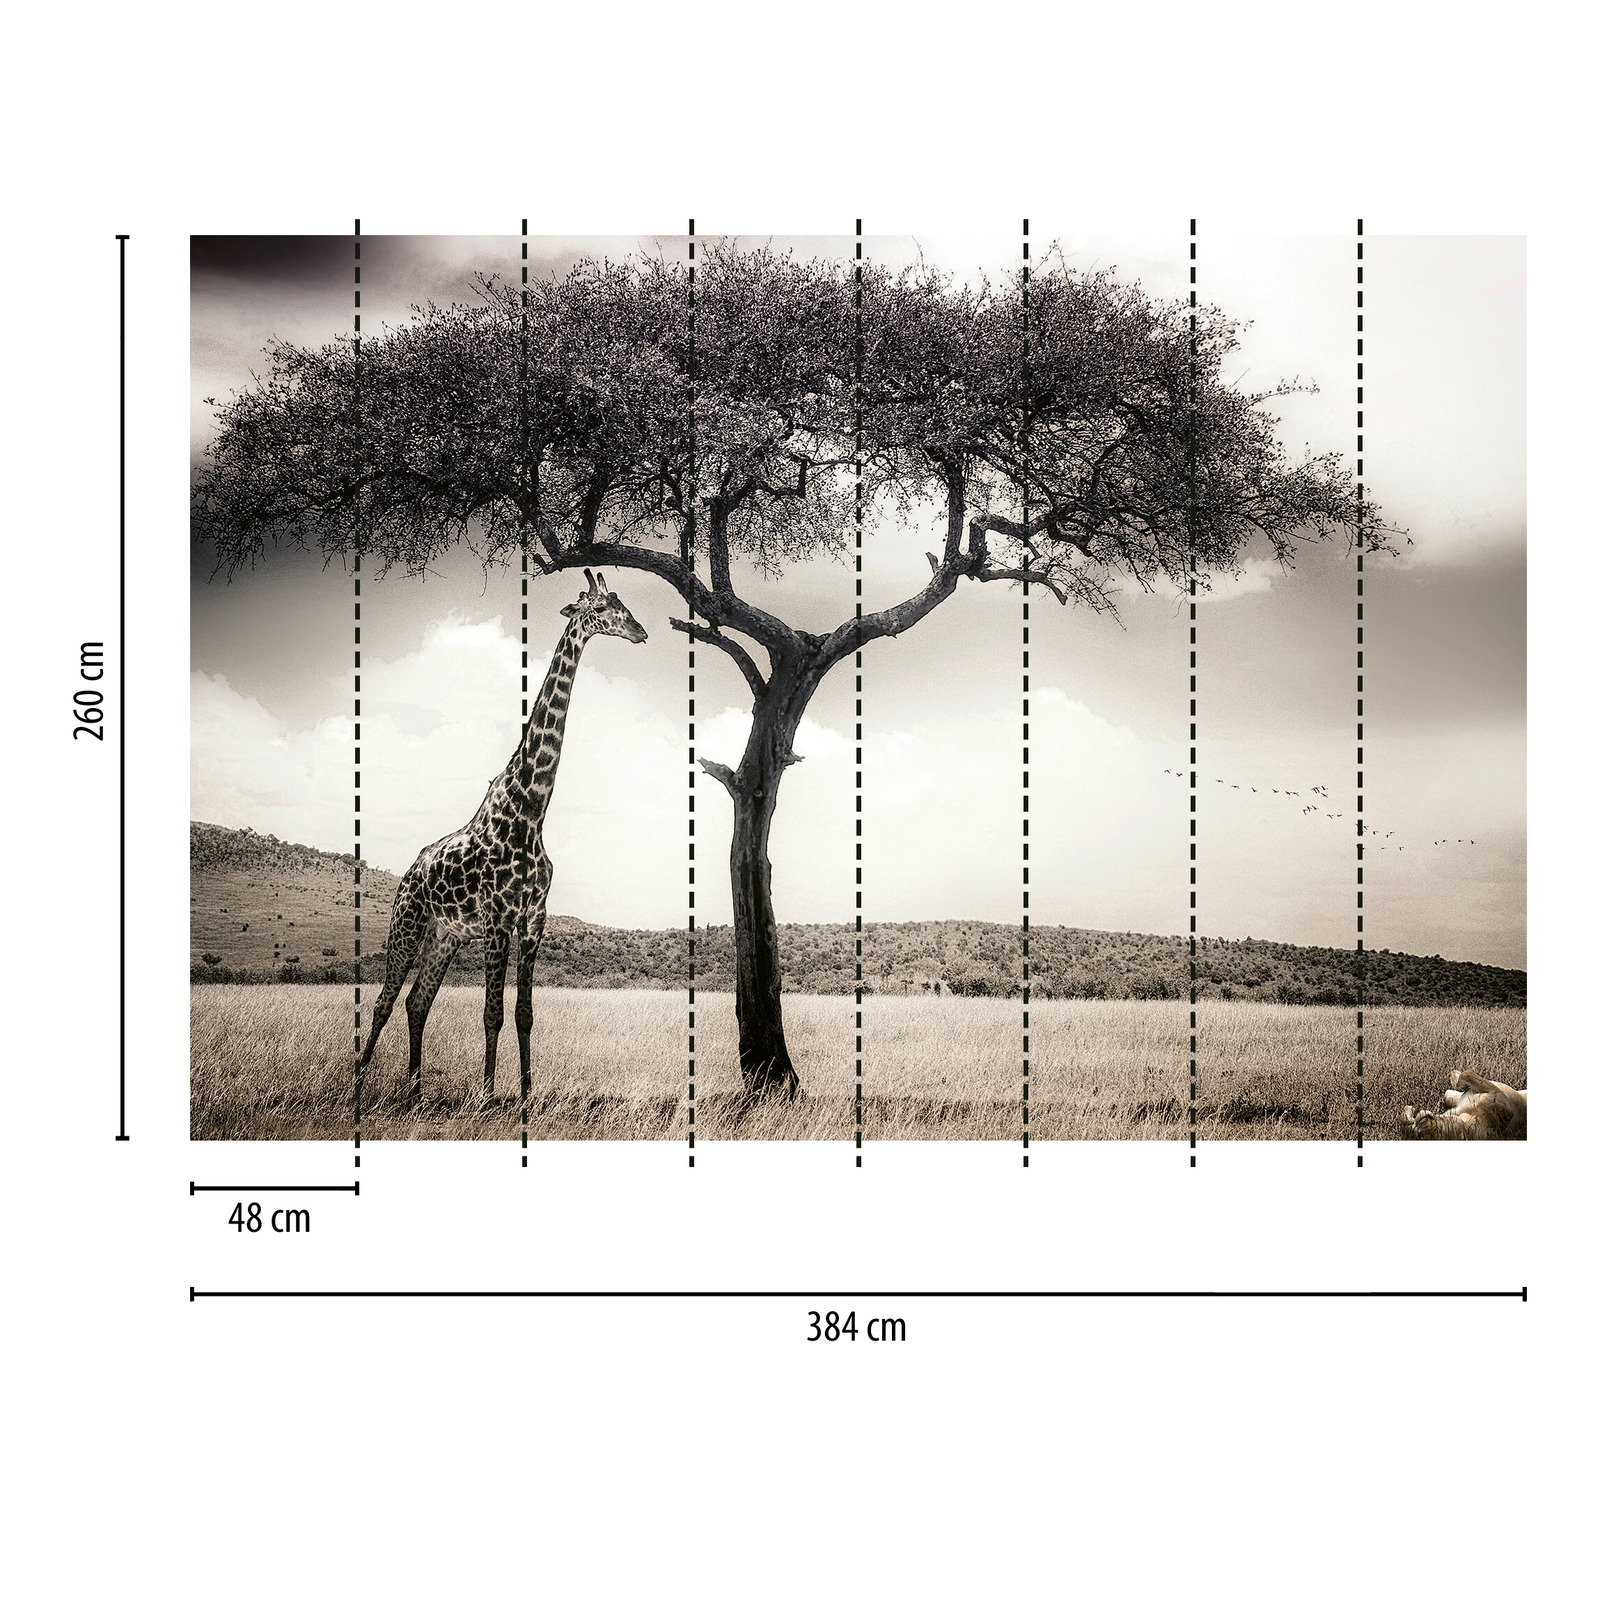             Fototapete Safari Tier Giraffe – Grau, Weiß, Schwarz
        